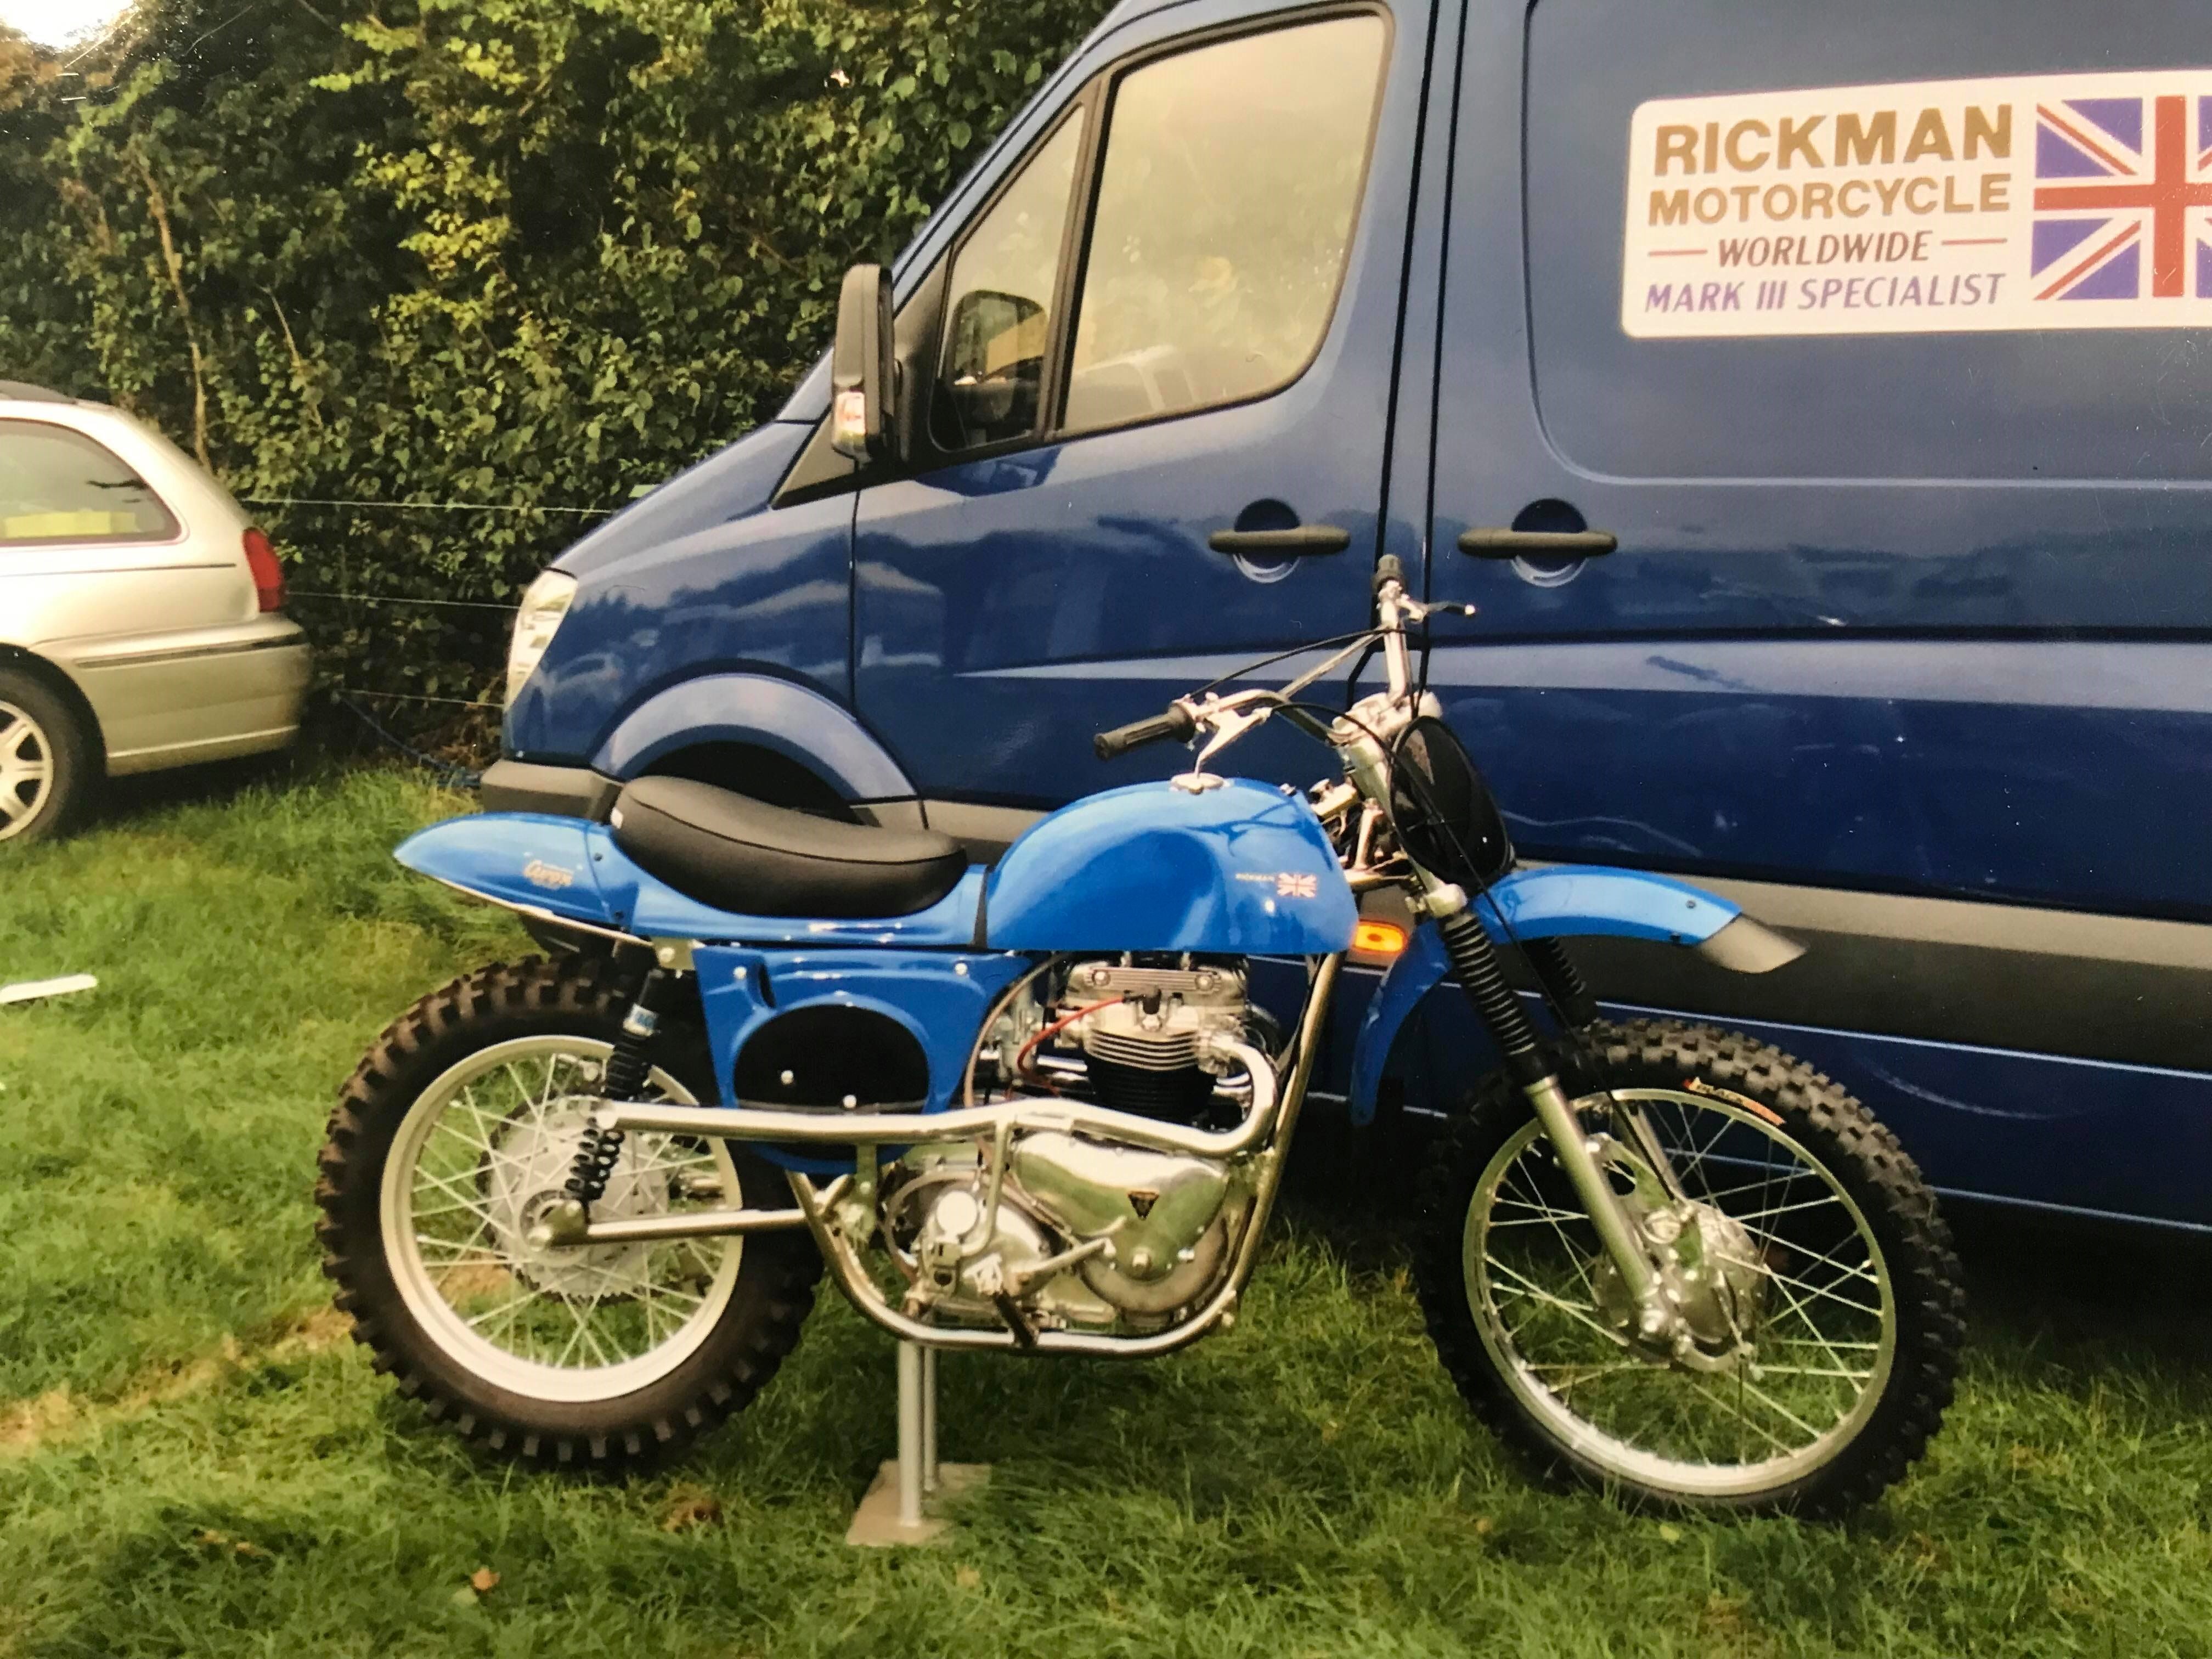 Rickman Motorcycle